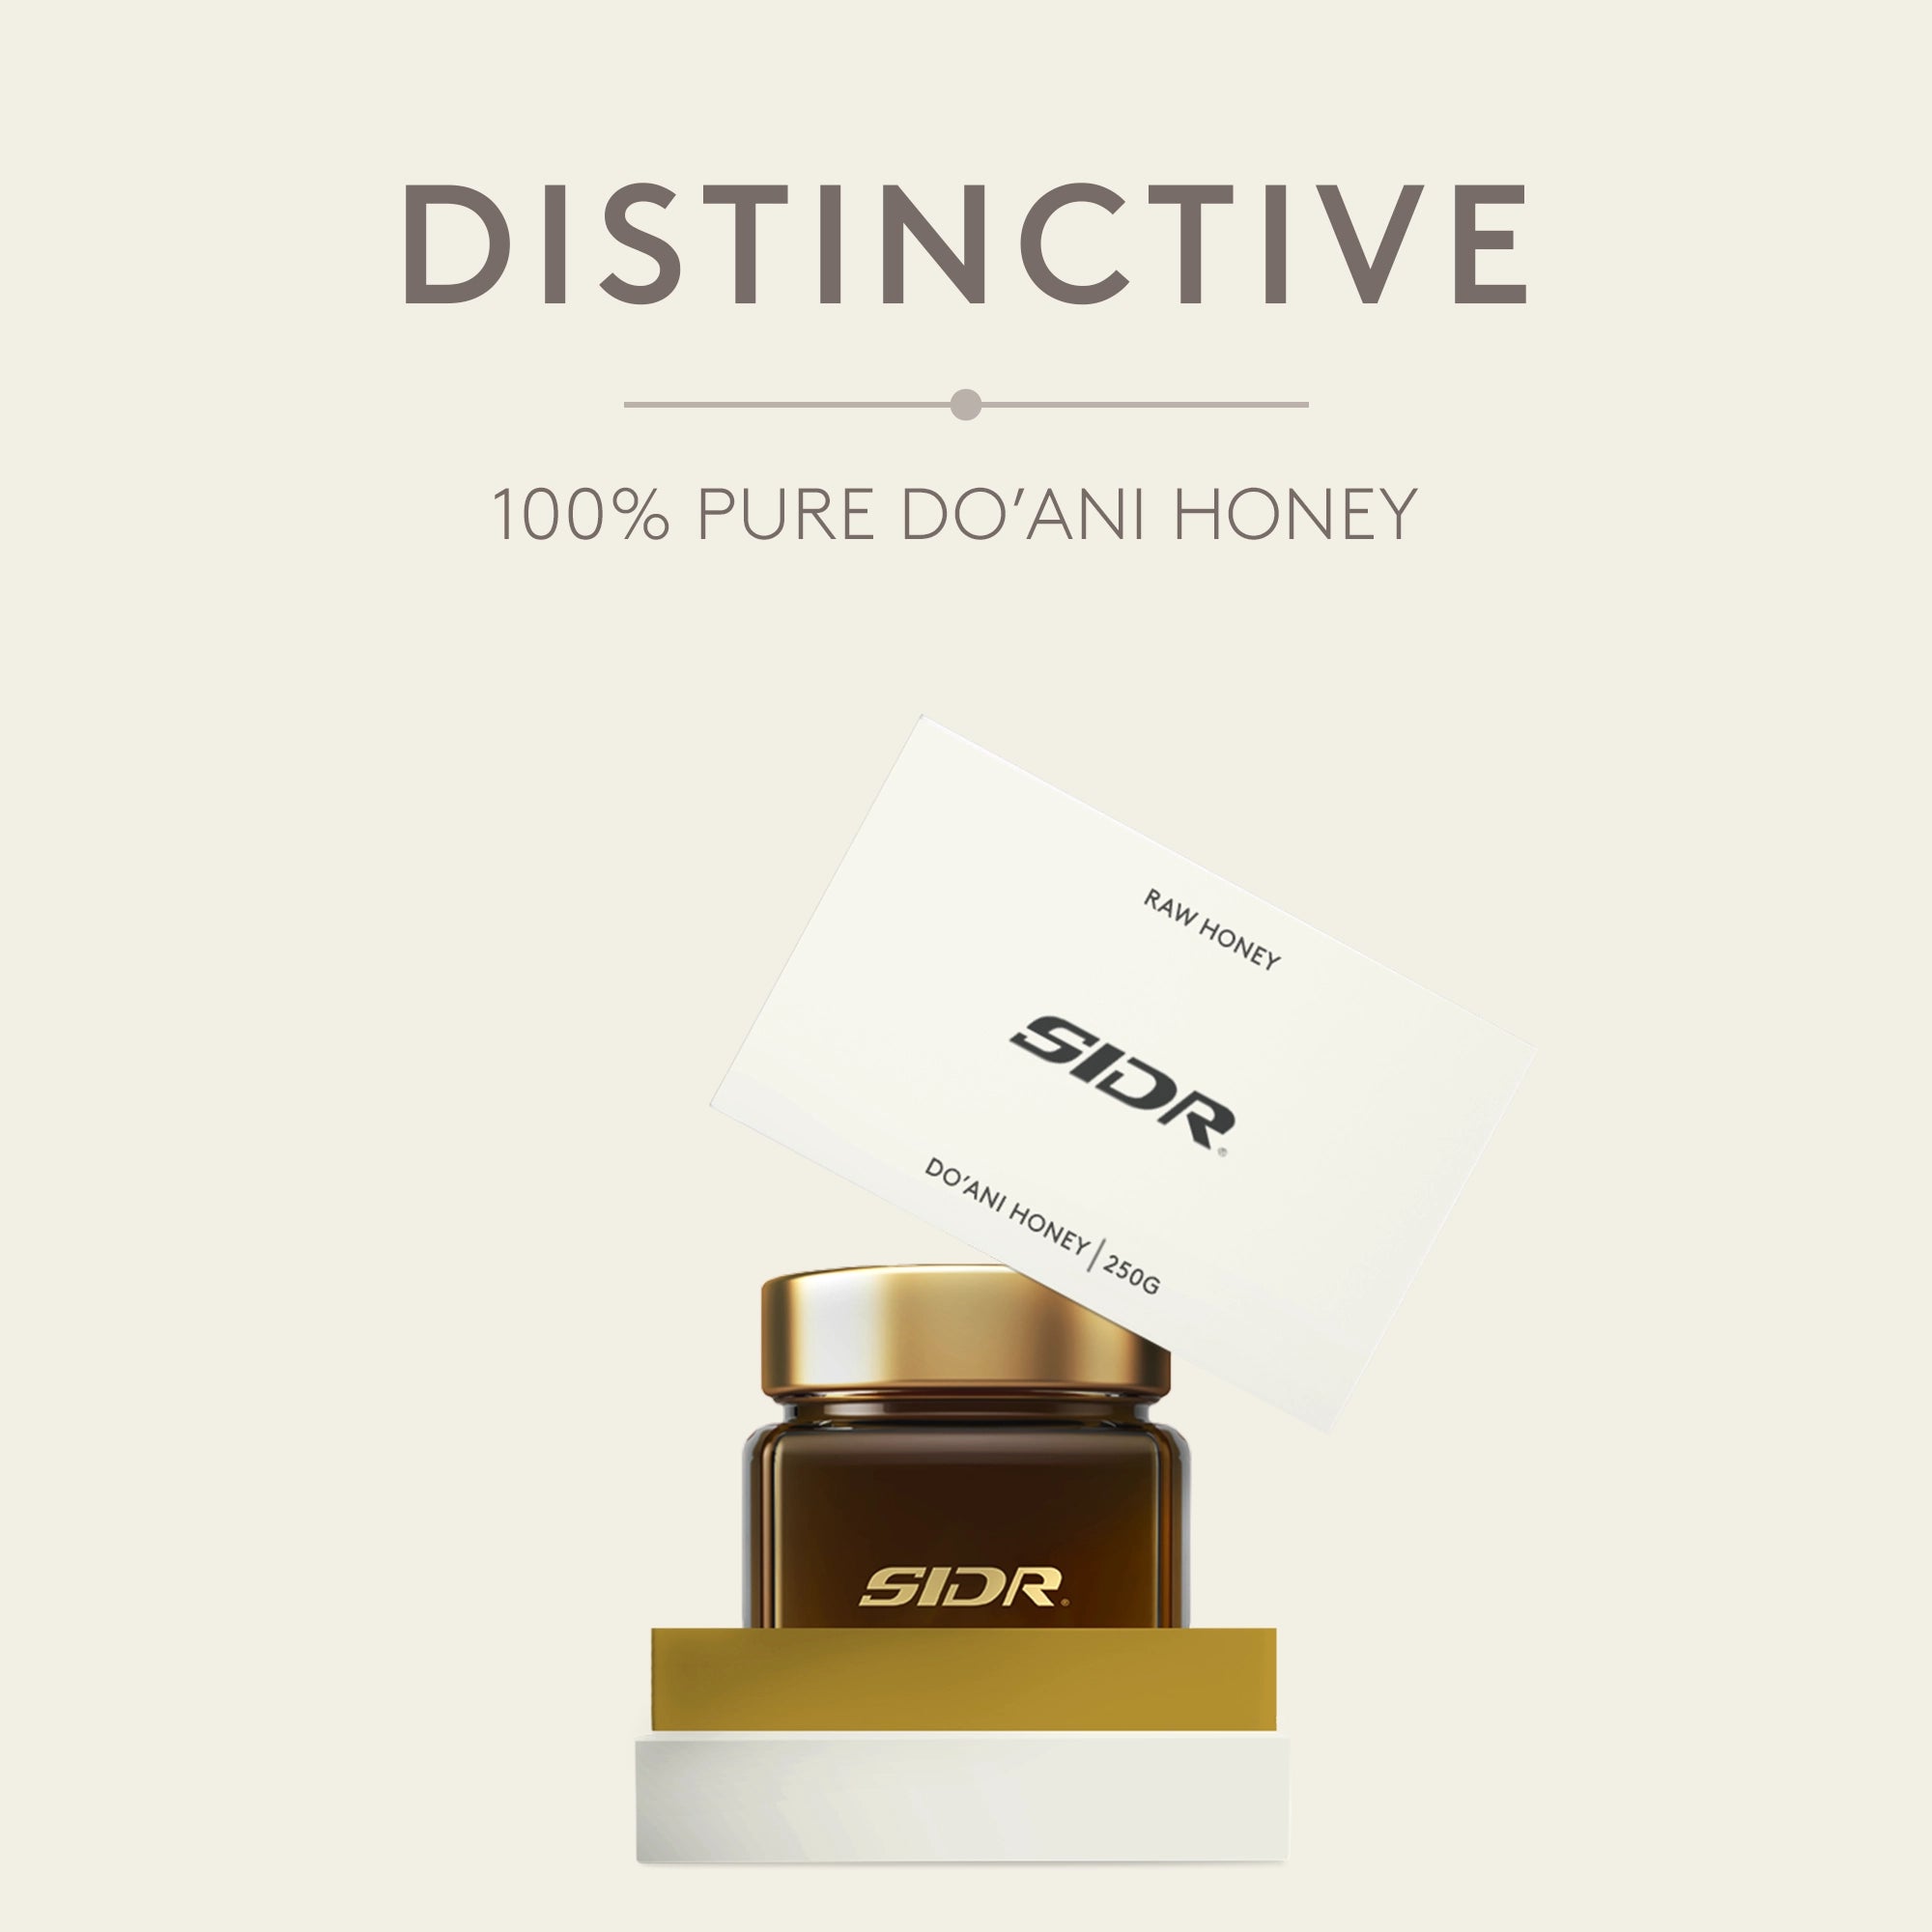 sidr doani honey distinctive